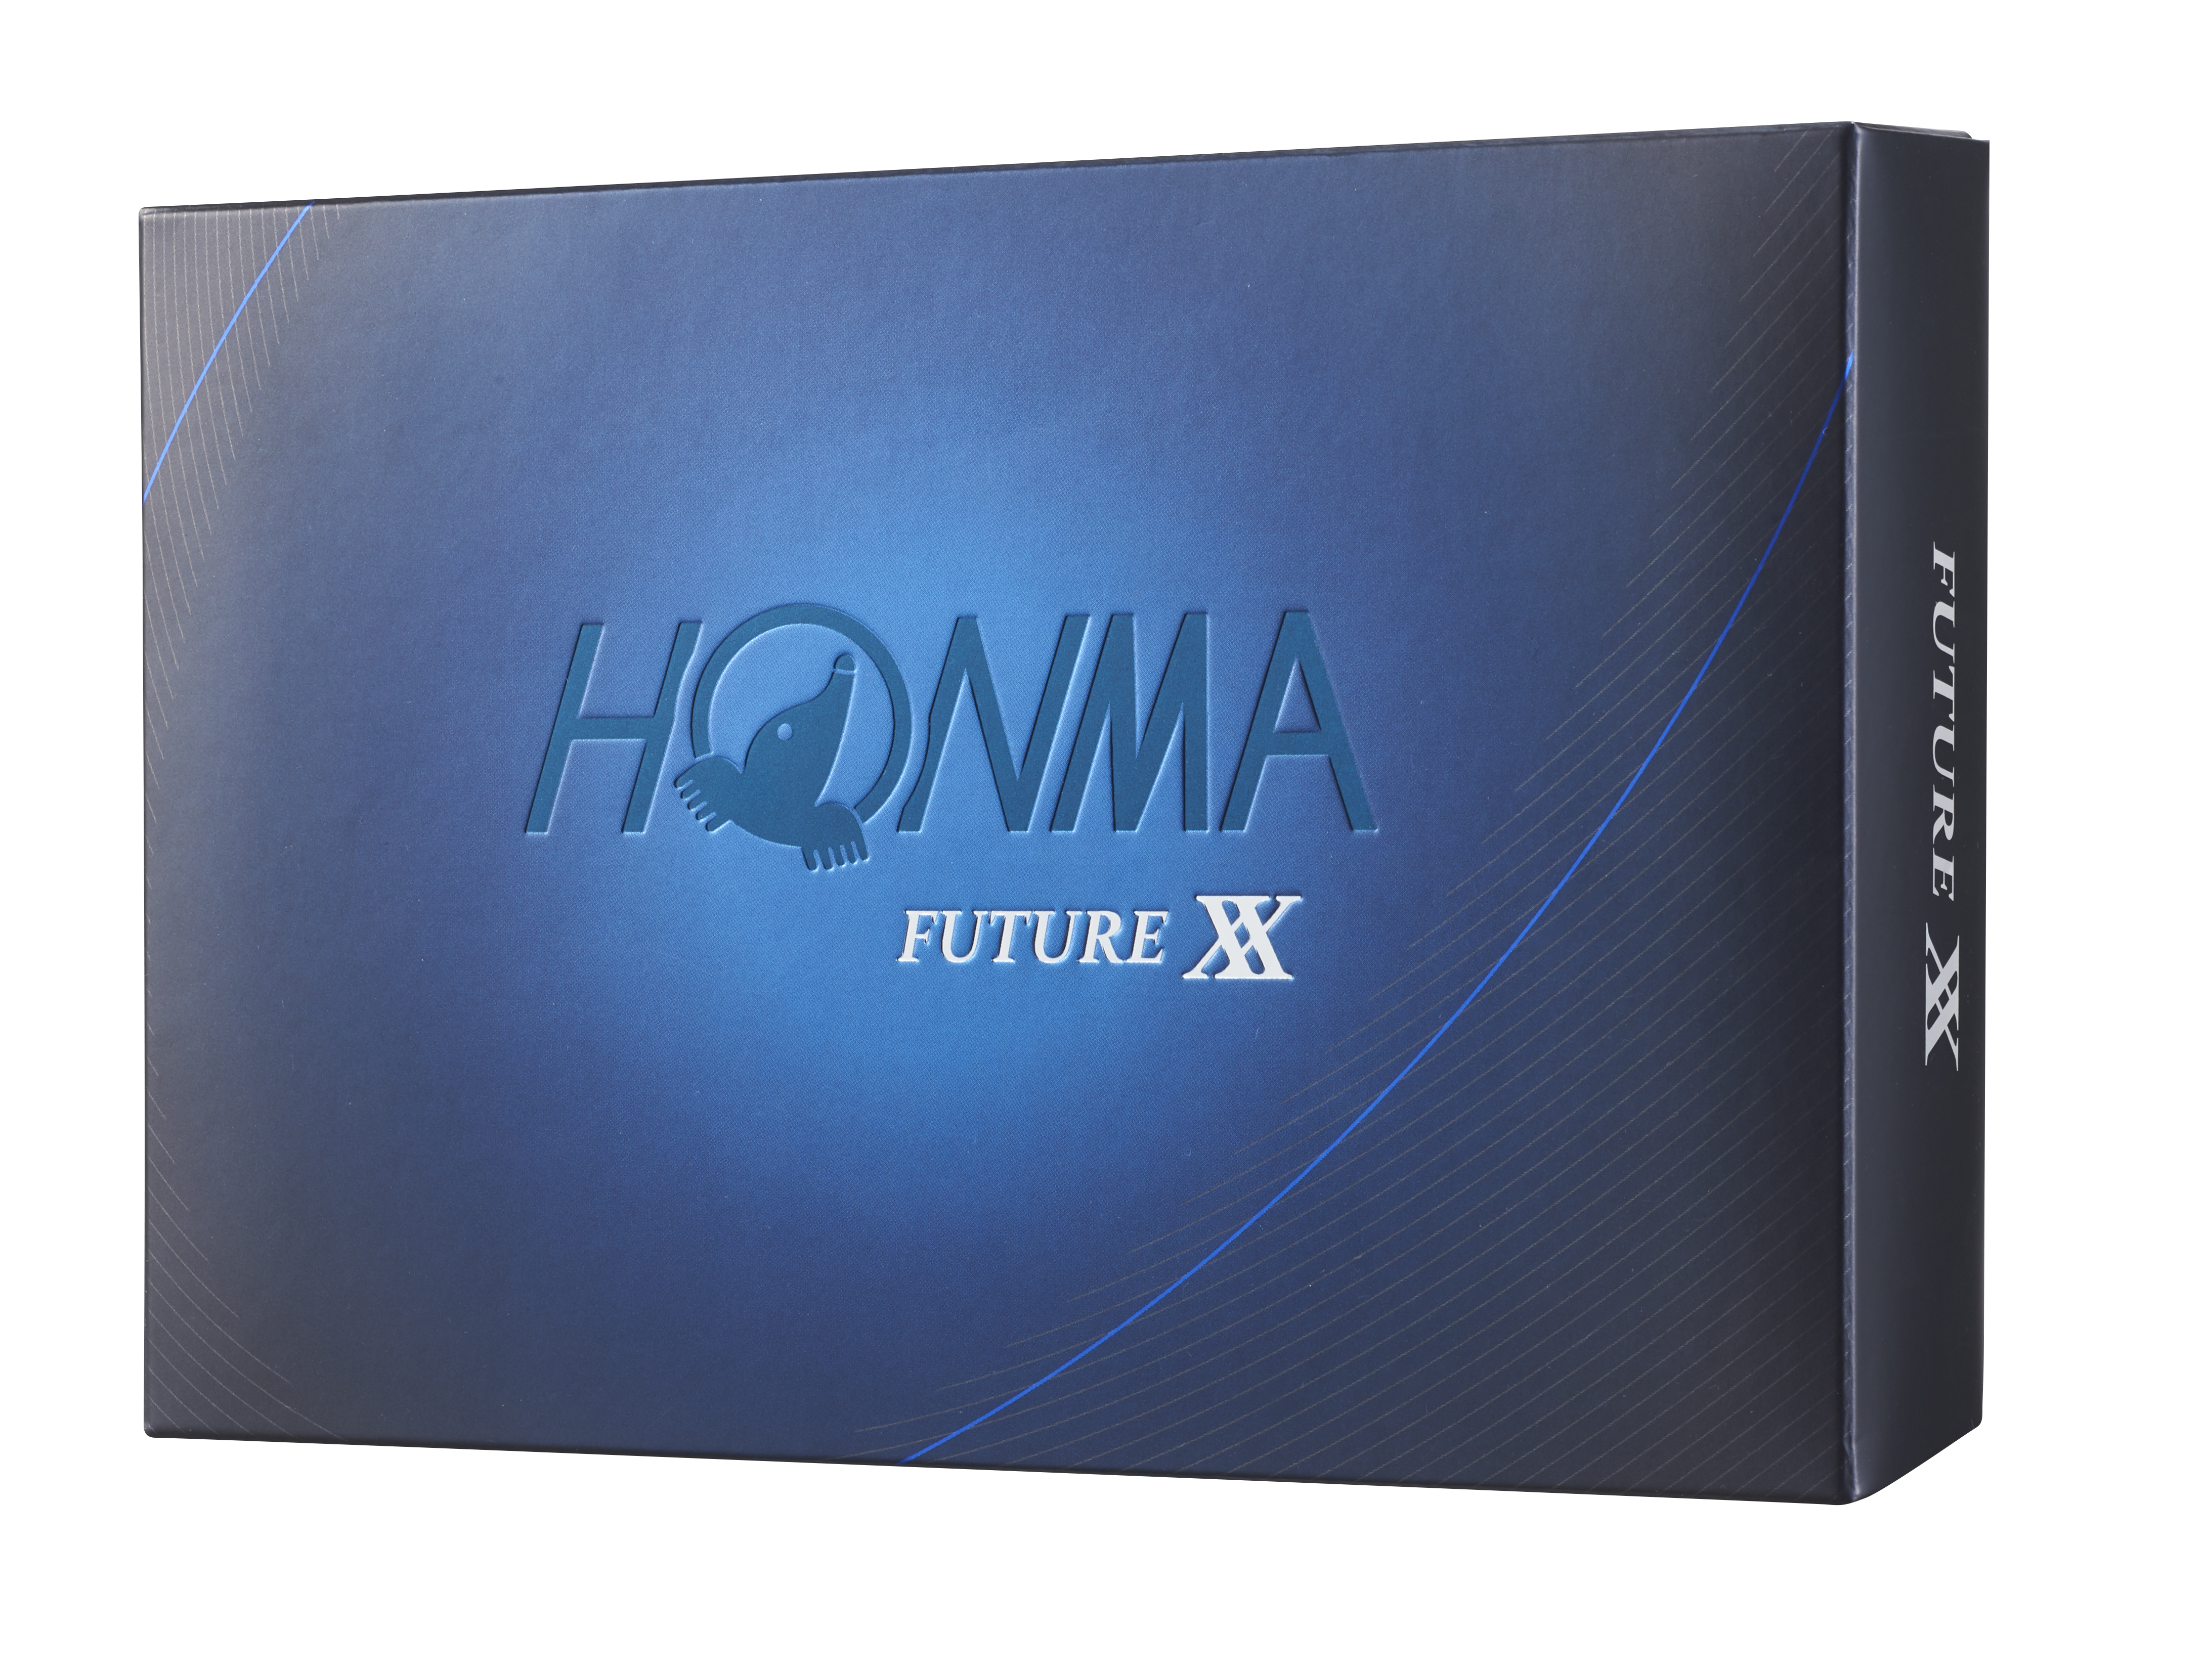 HONMA Golf rolls out new Future XX golf ball to multi-layer ball range